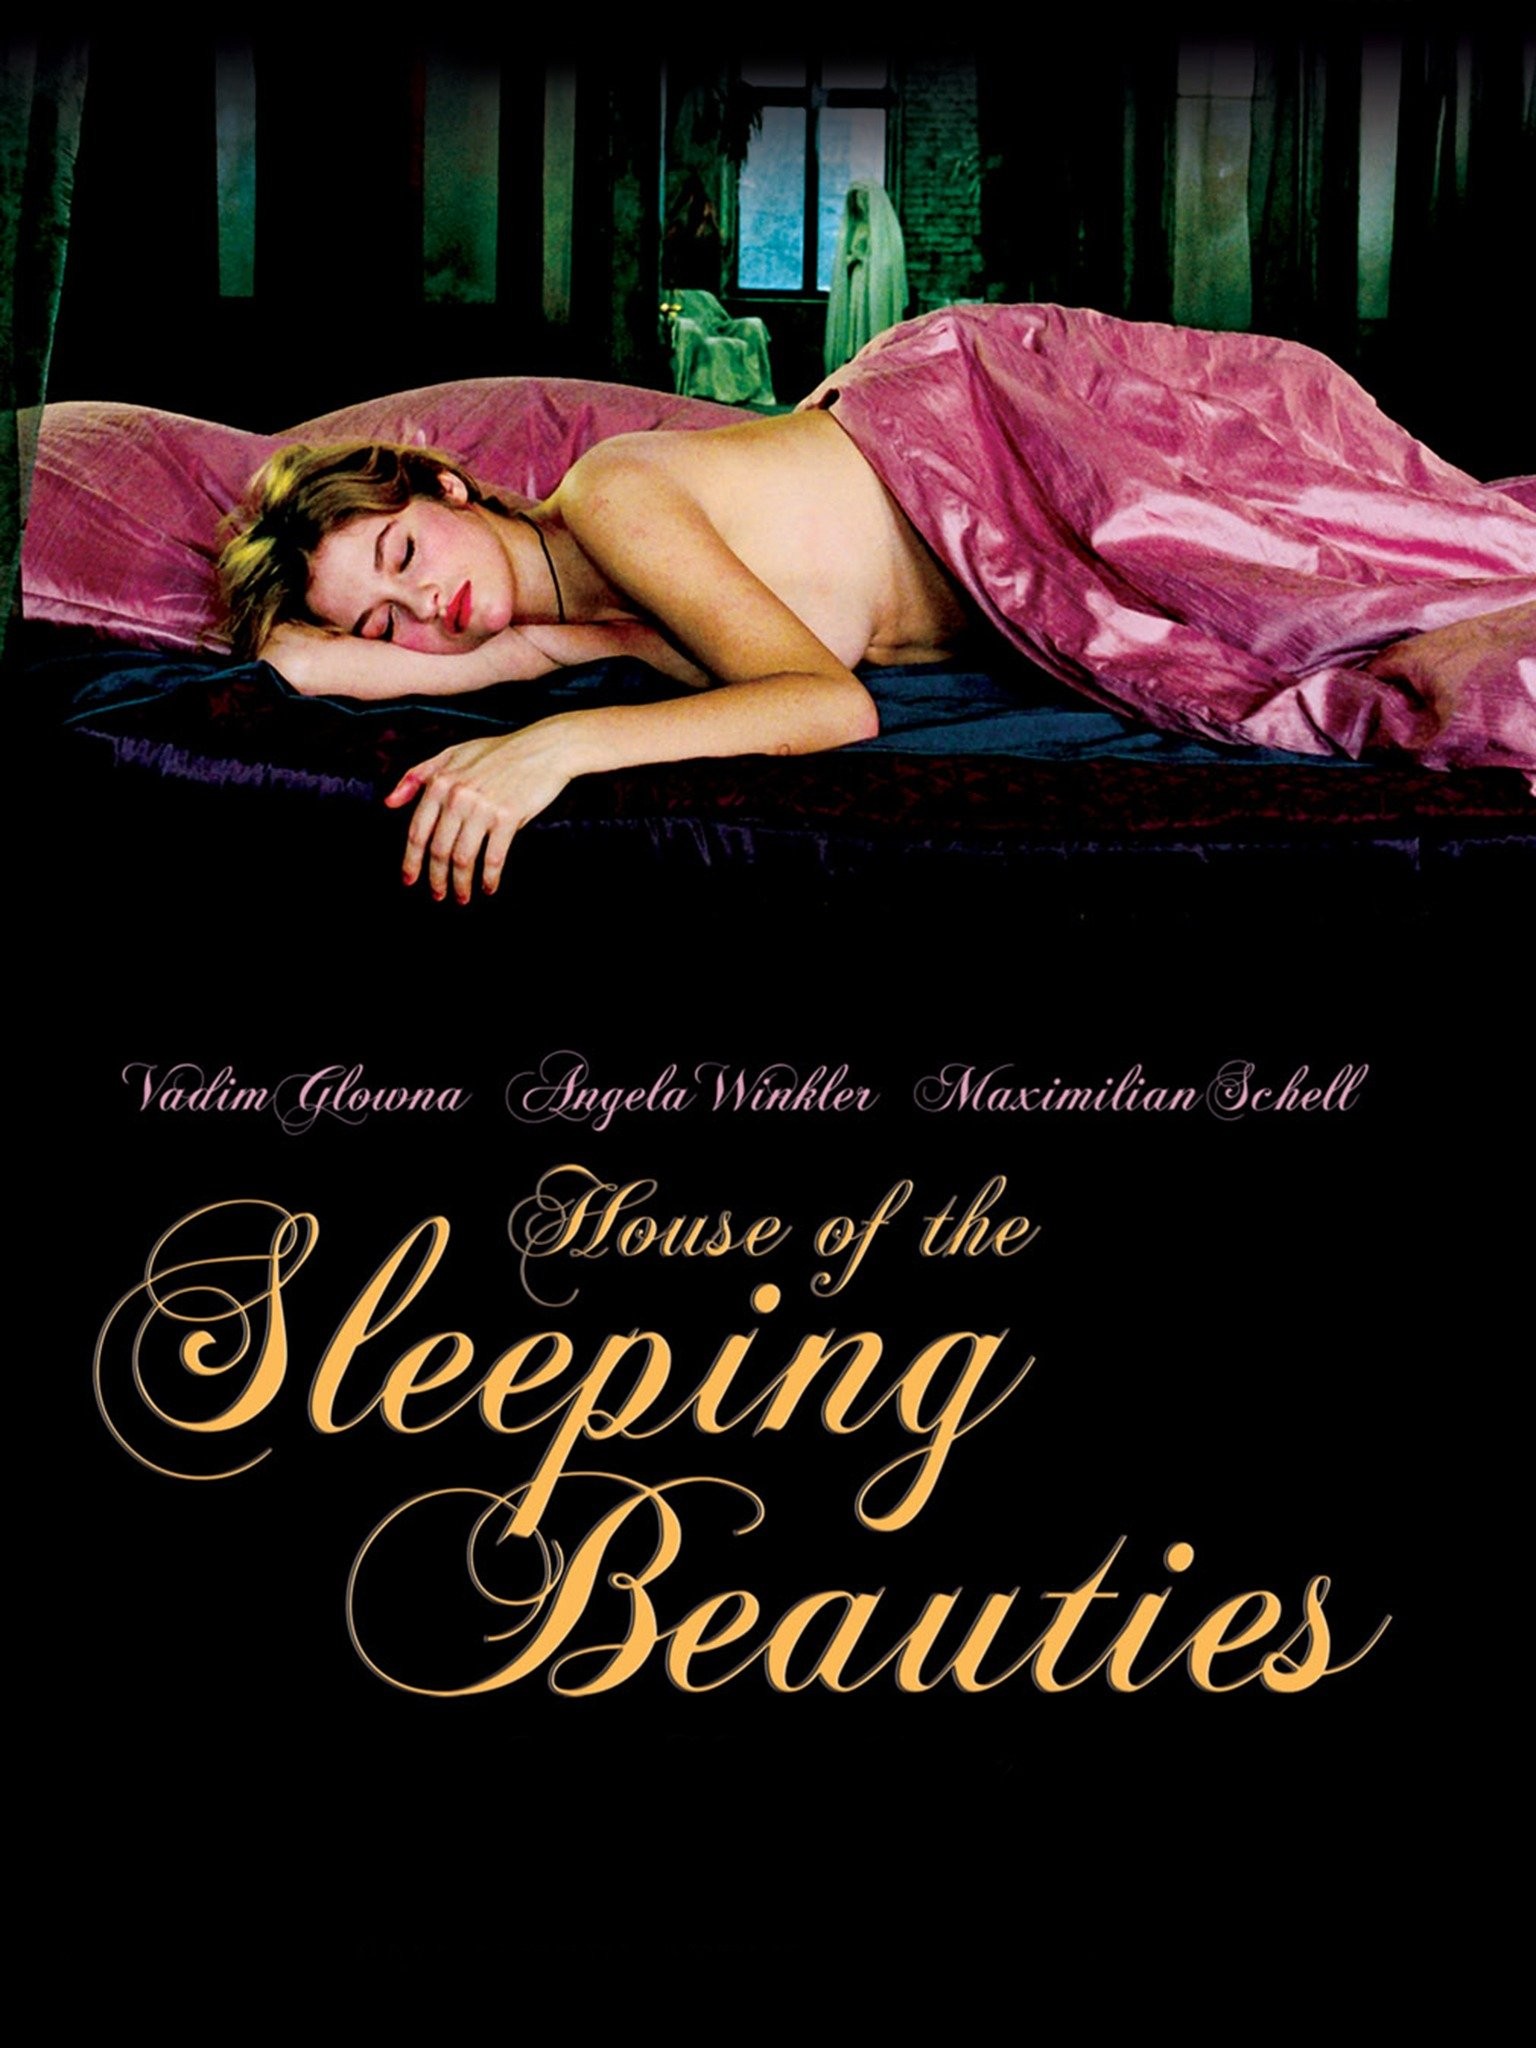 Hd Full Movie Porn Sleeping - House of the Sleeping Beauties - Rotten Tomatoes